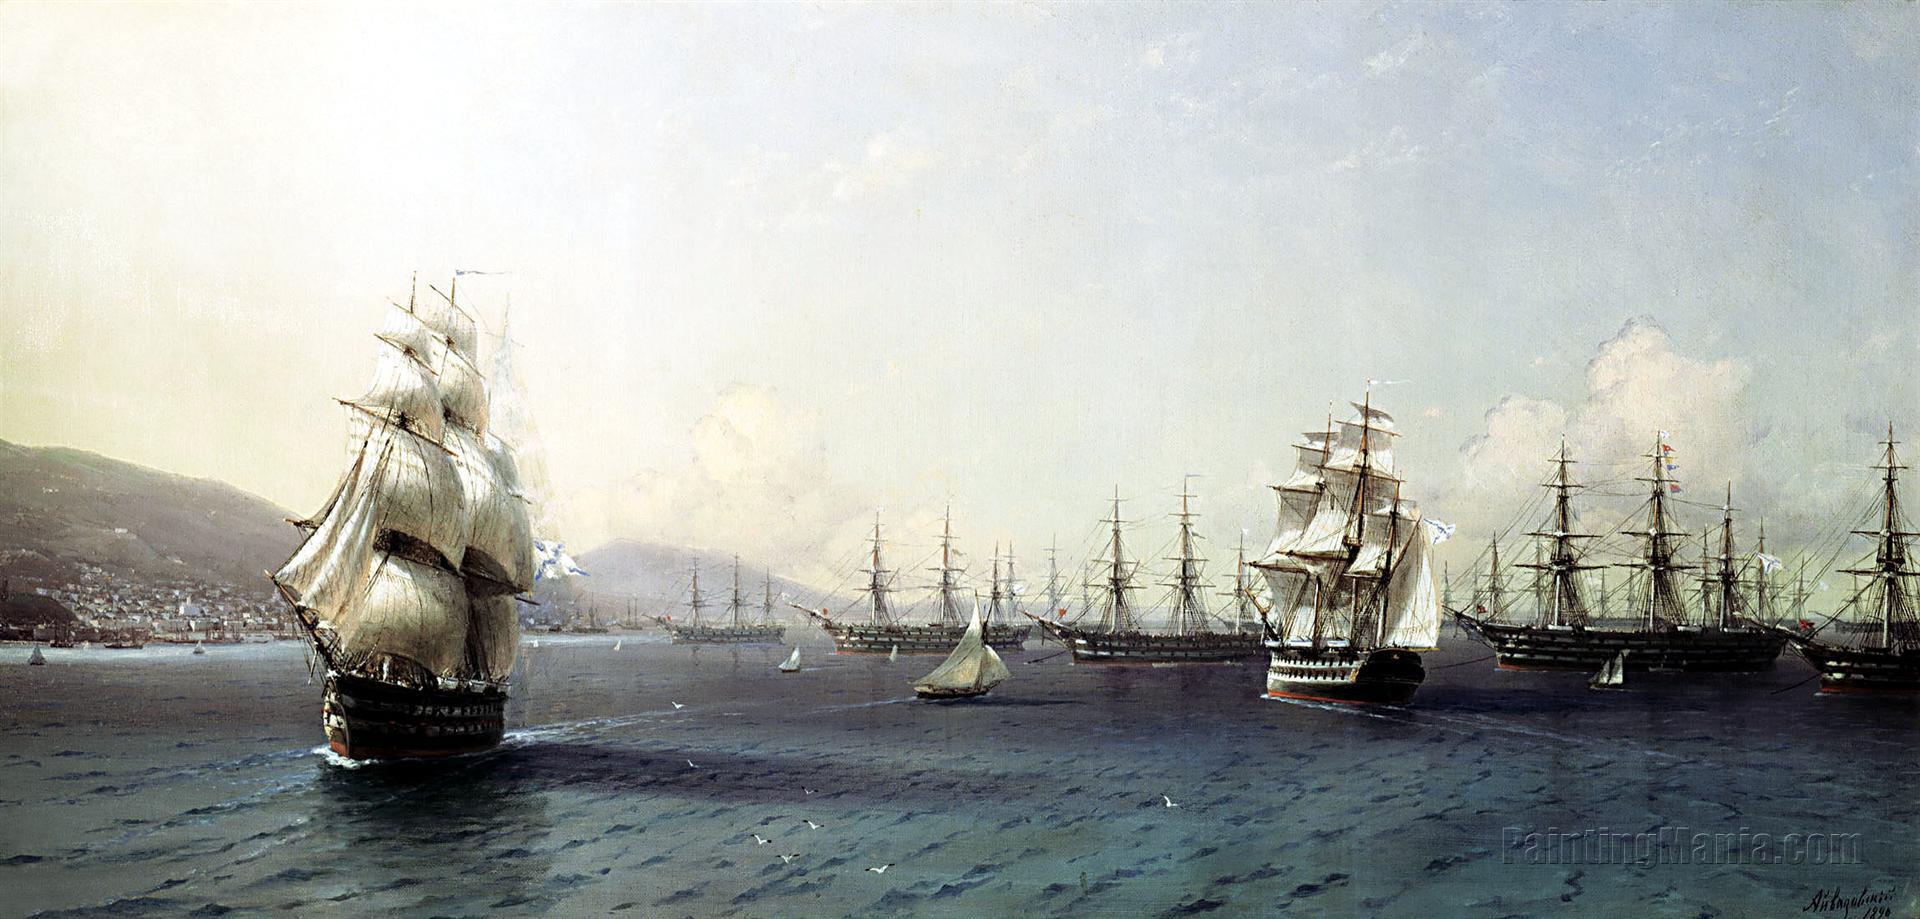 Black Sea Fleet in the Bay of Feodosia, just before the Crimean War